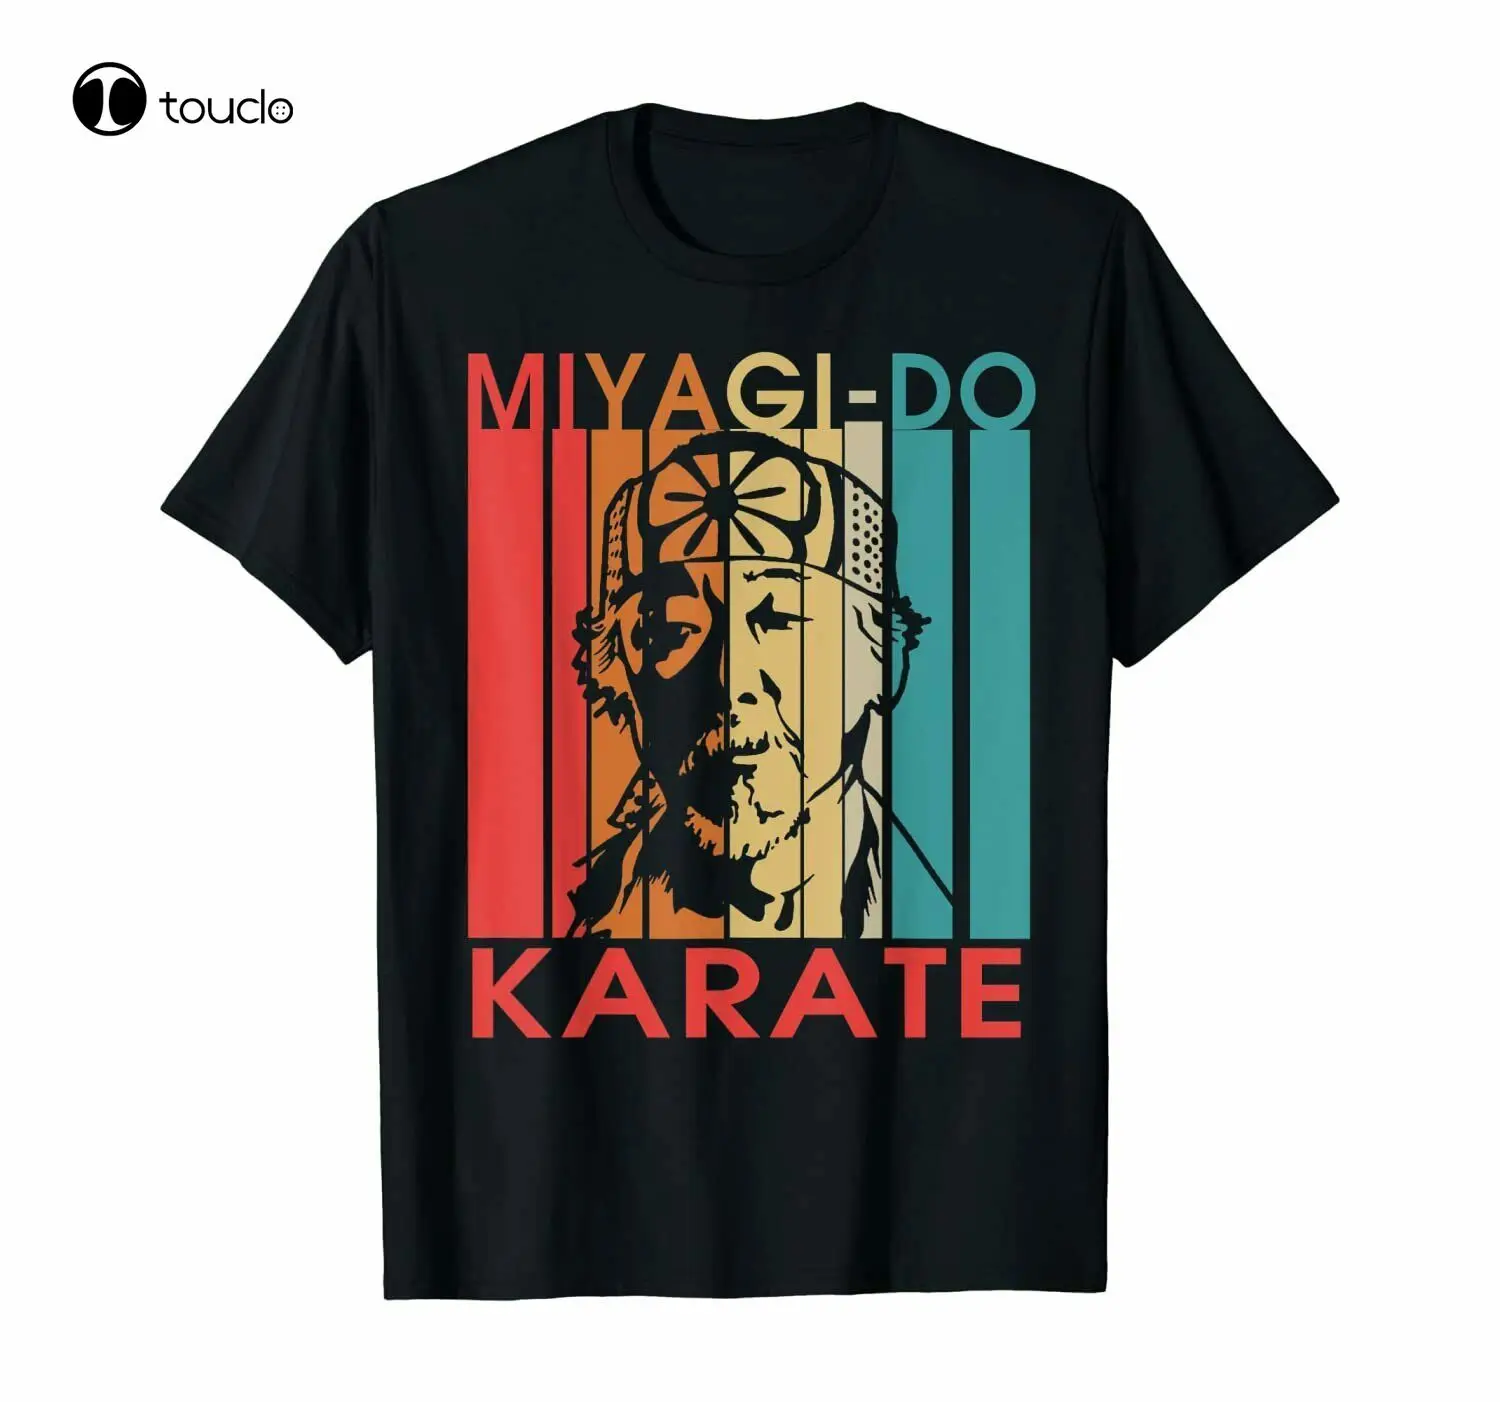 Miyagi-Do Karate Kid Martial Art Vintage Retro Movie Funny Black T-Shirt S-5Xl Tee Shirt Fashion Funny New Xs-5Xl